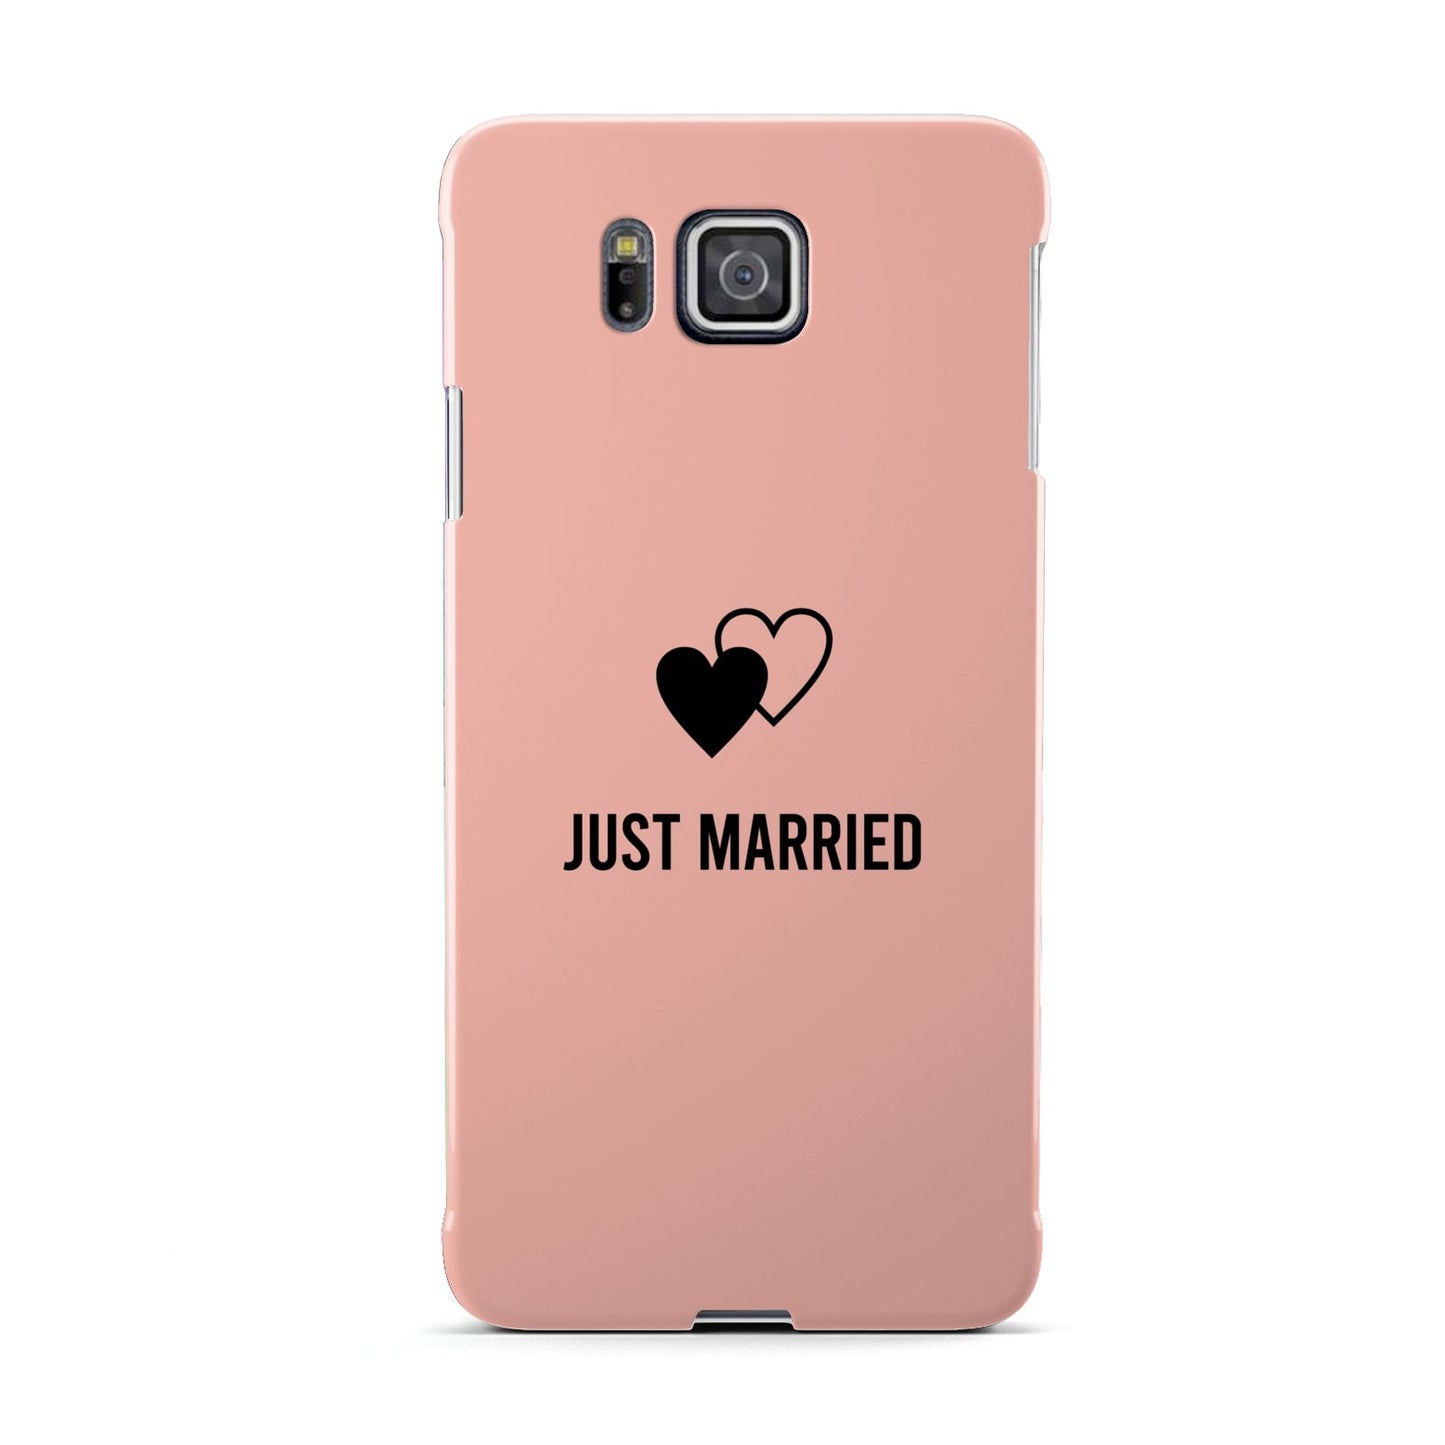 Just Married Samsung Galaxy Alpha Case